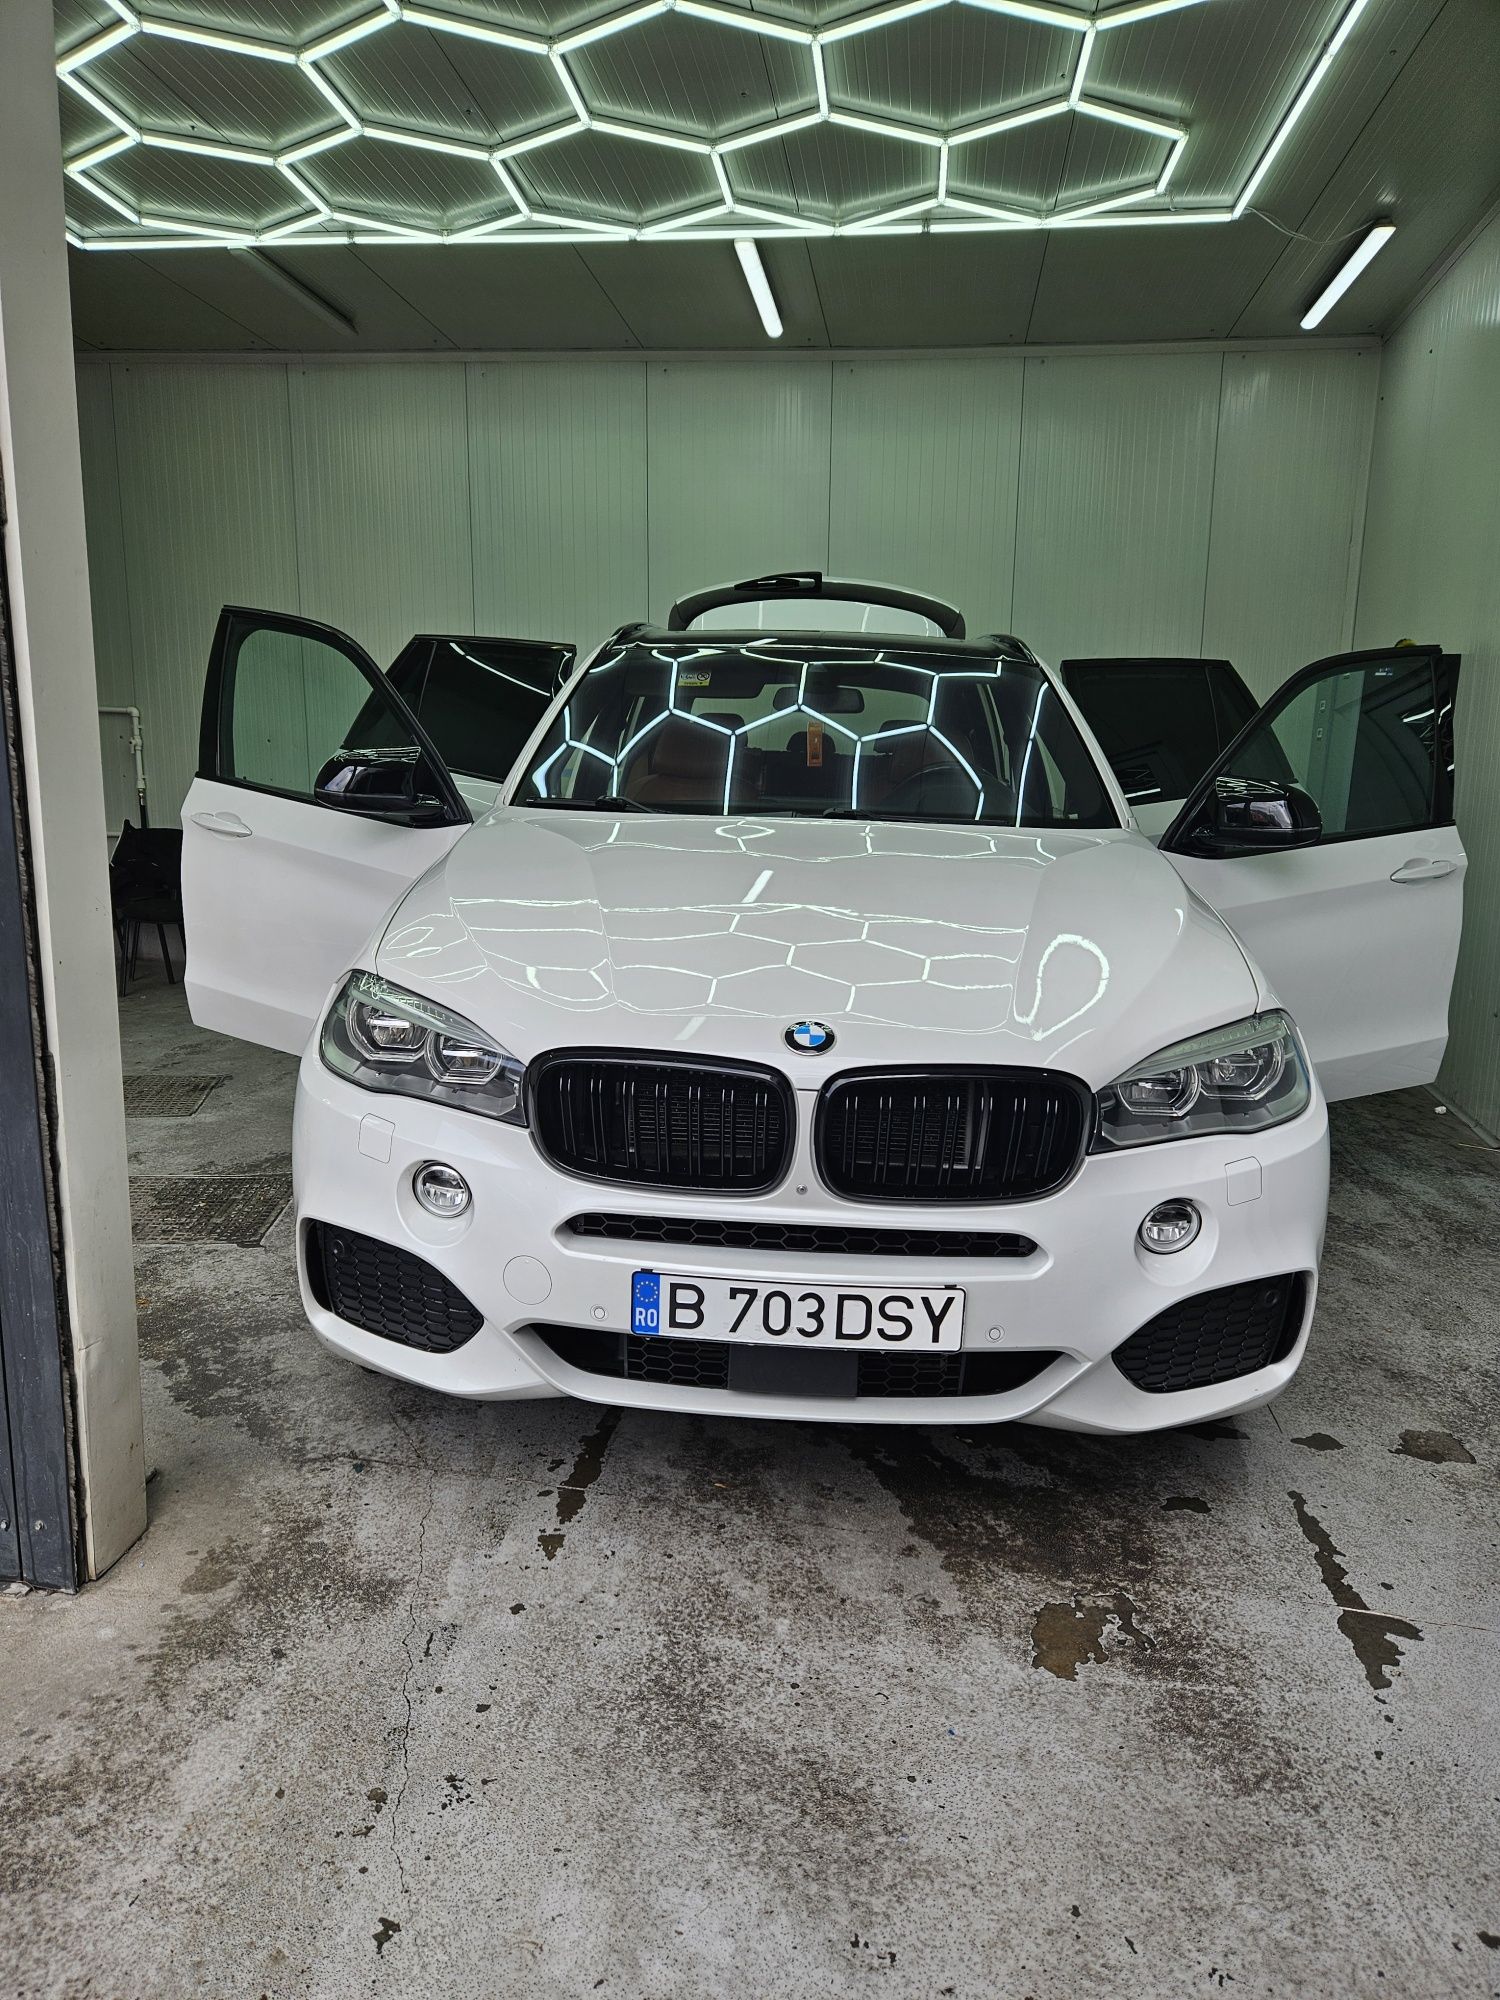 Vând BMW x5 f15 4.0d an 2016